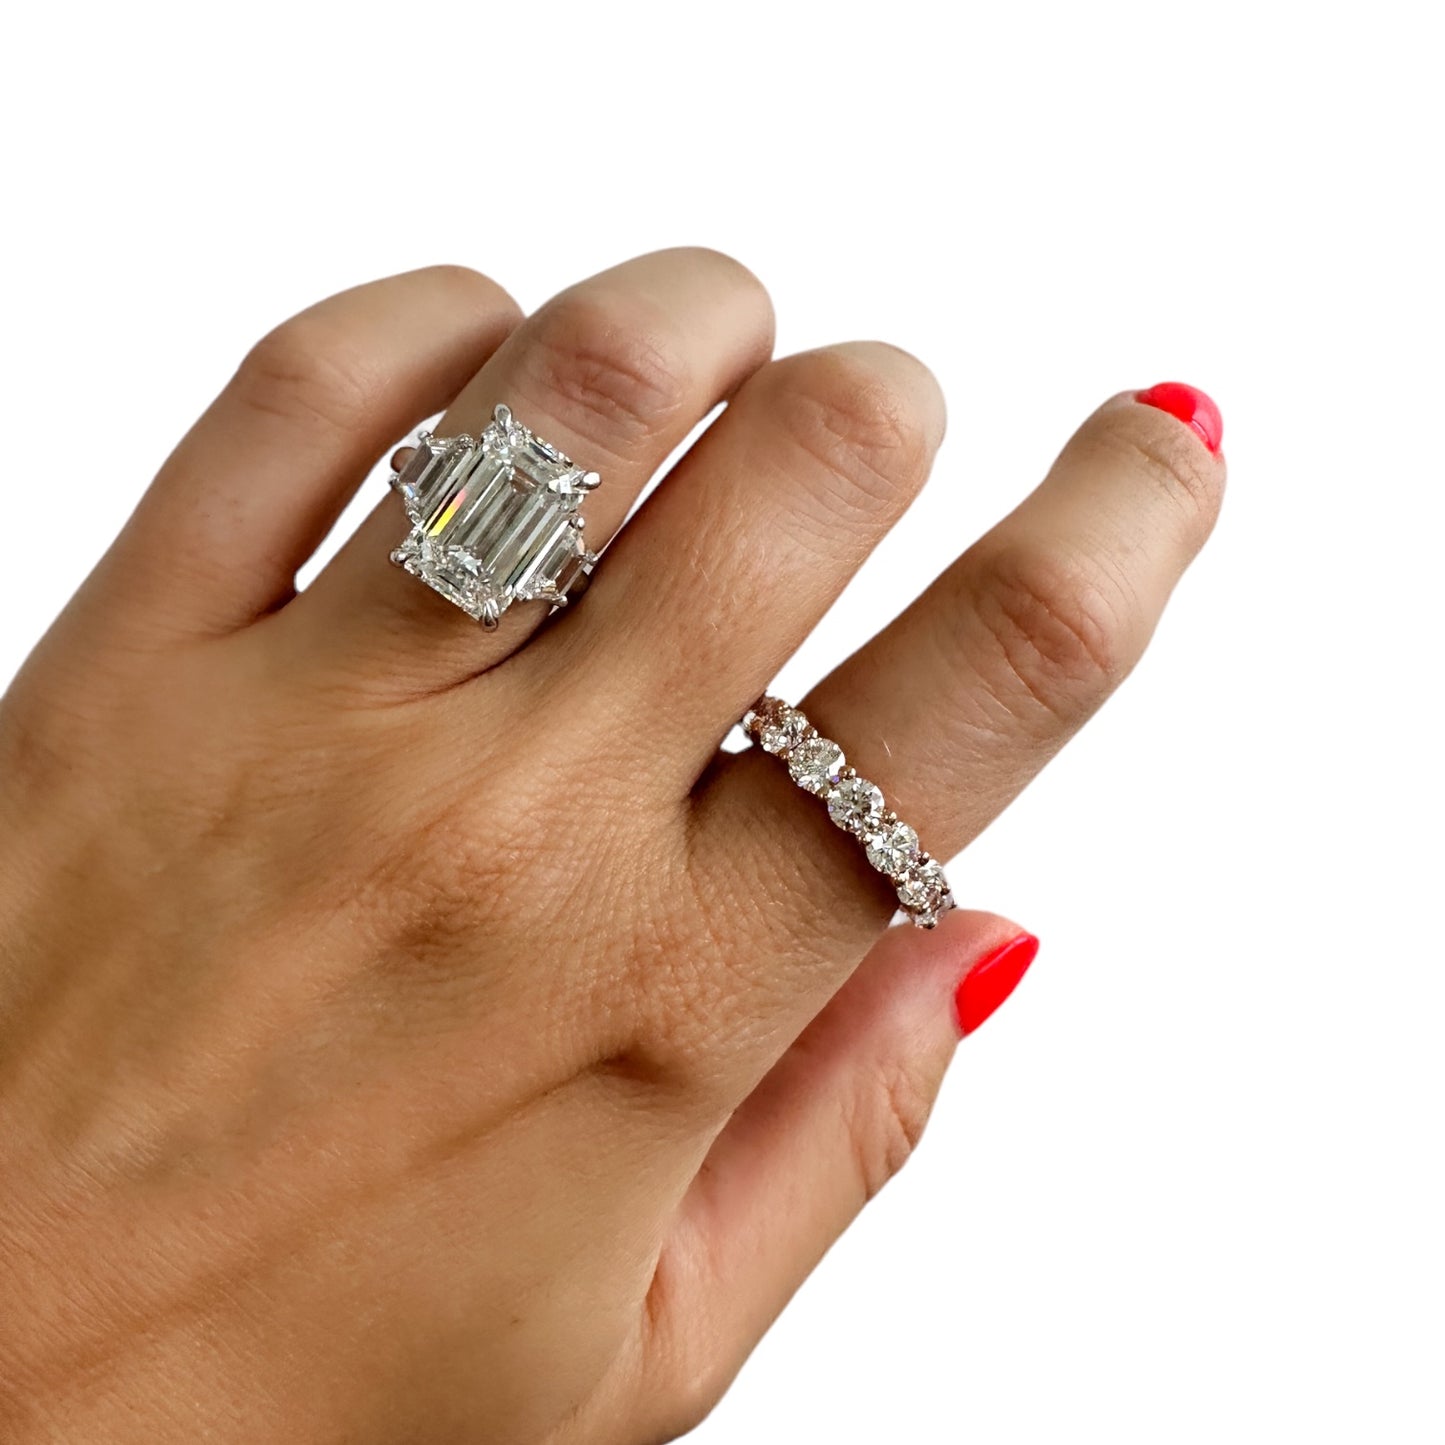 Emerald cut diamond engagement ring and 30 points diamond wedding ring